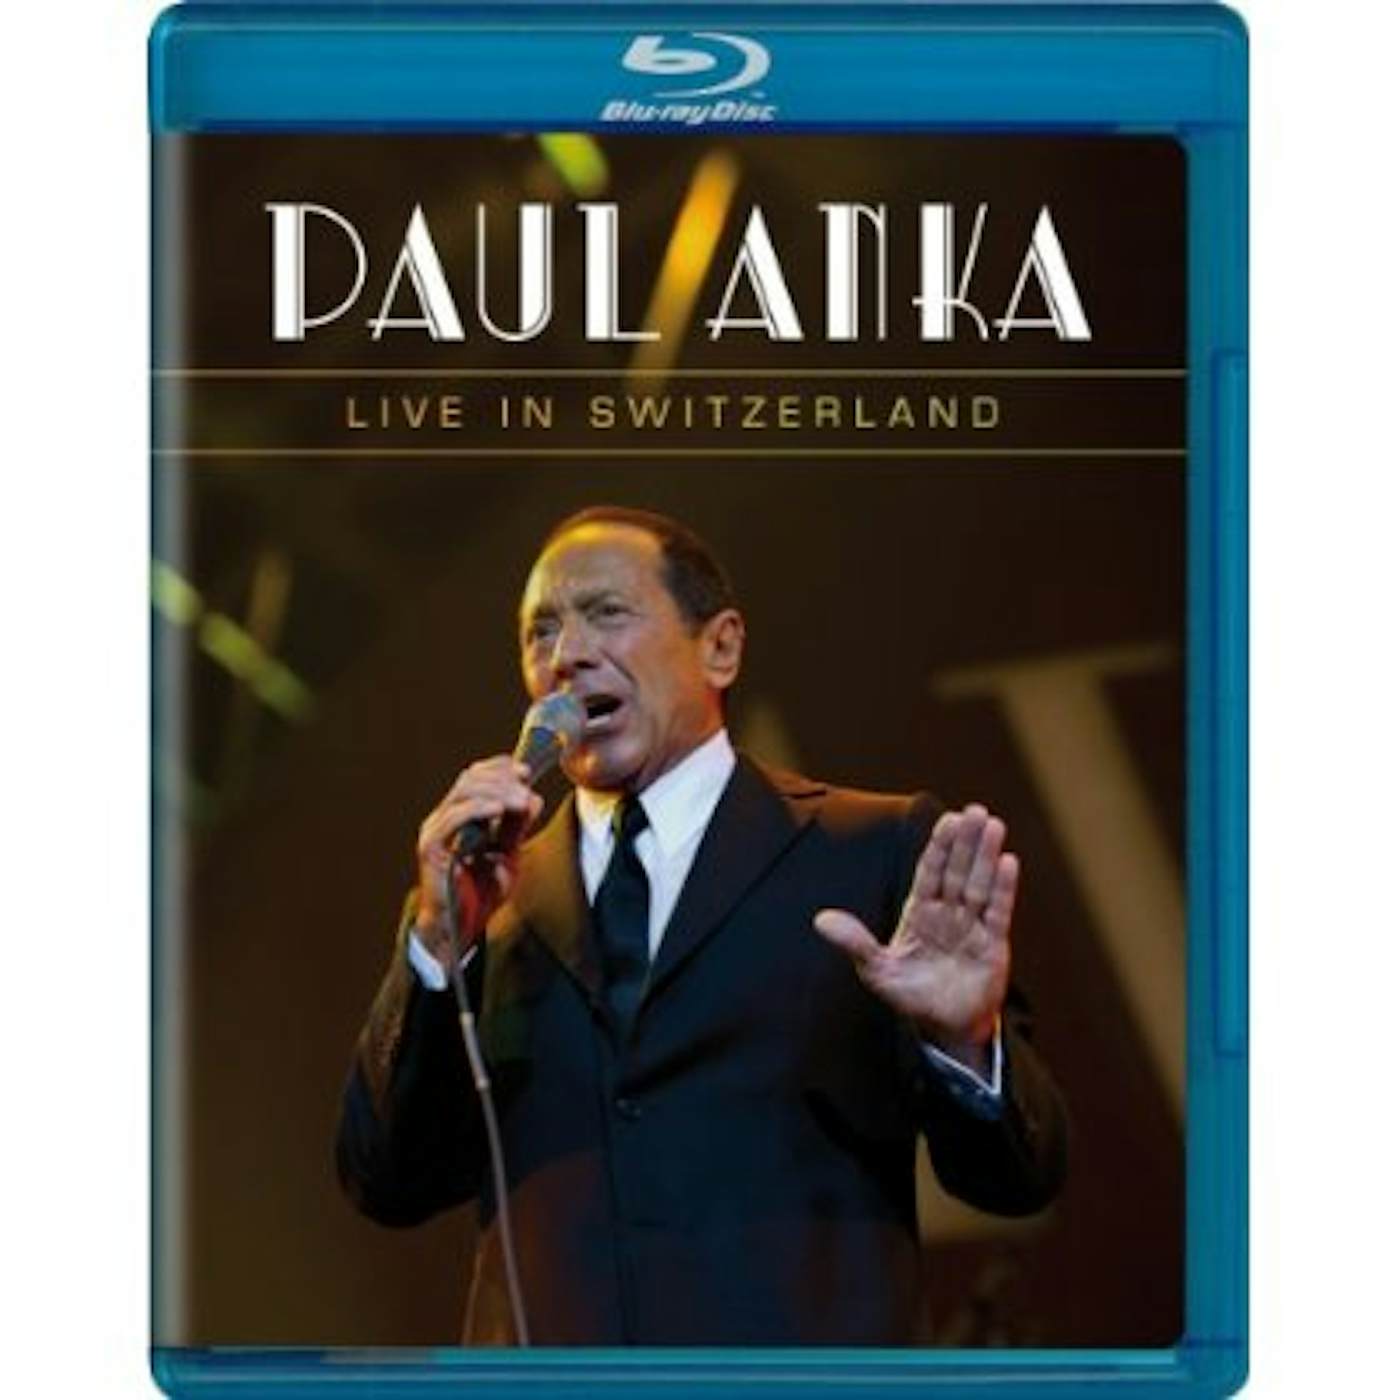 Paul Anka LIVE IN SWITZERLAND Blu-ray